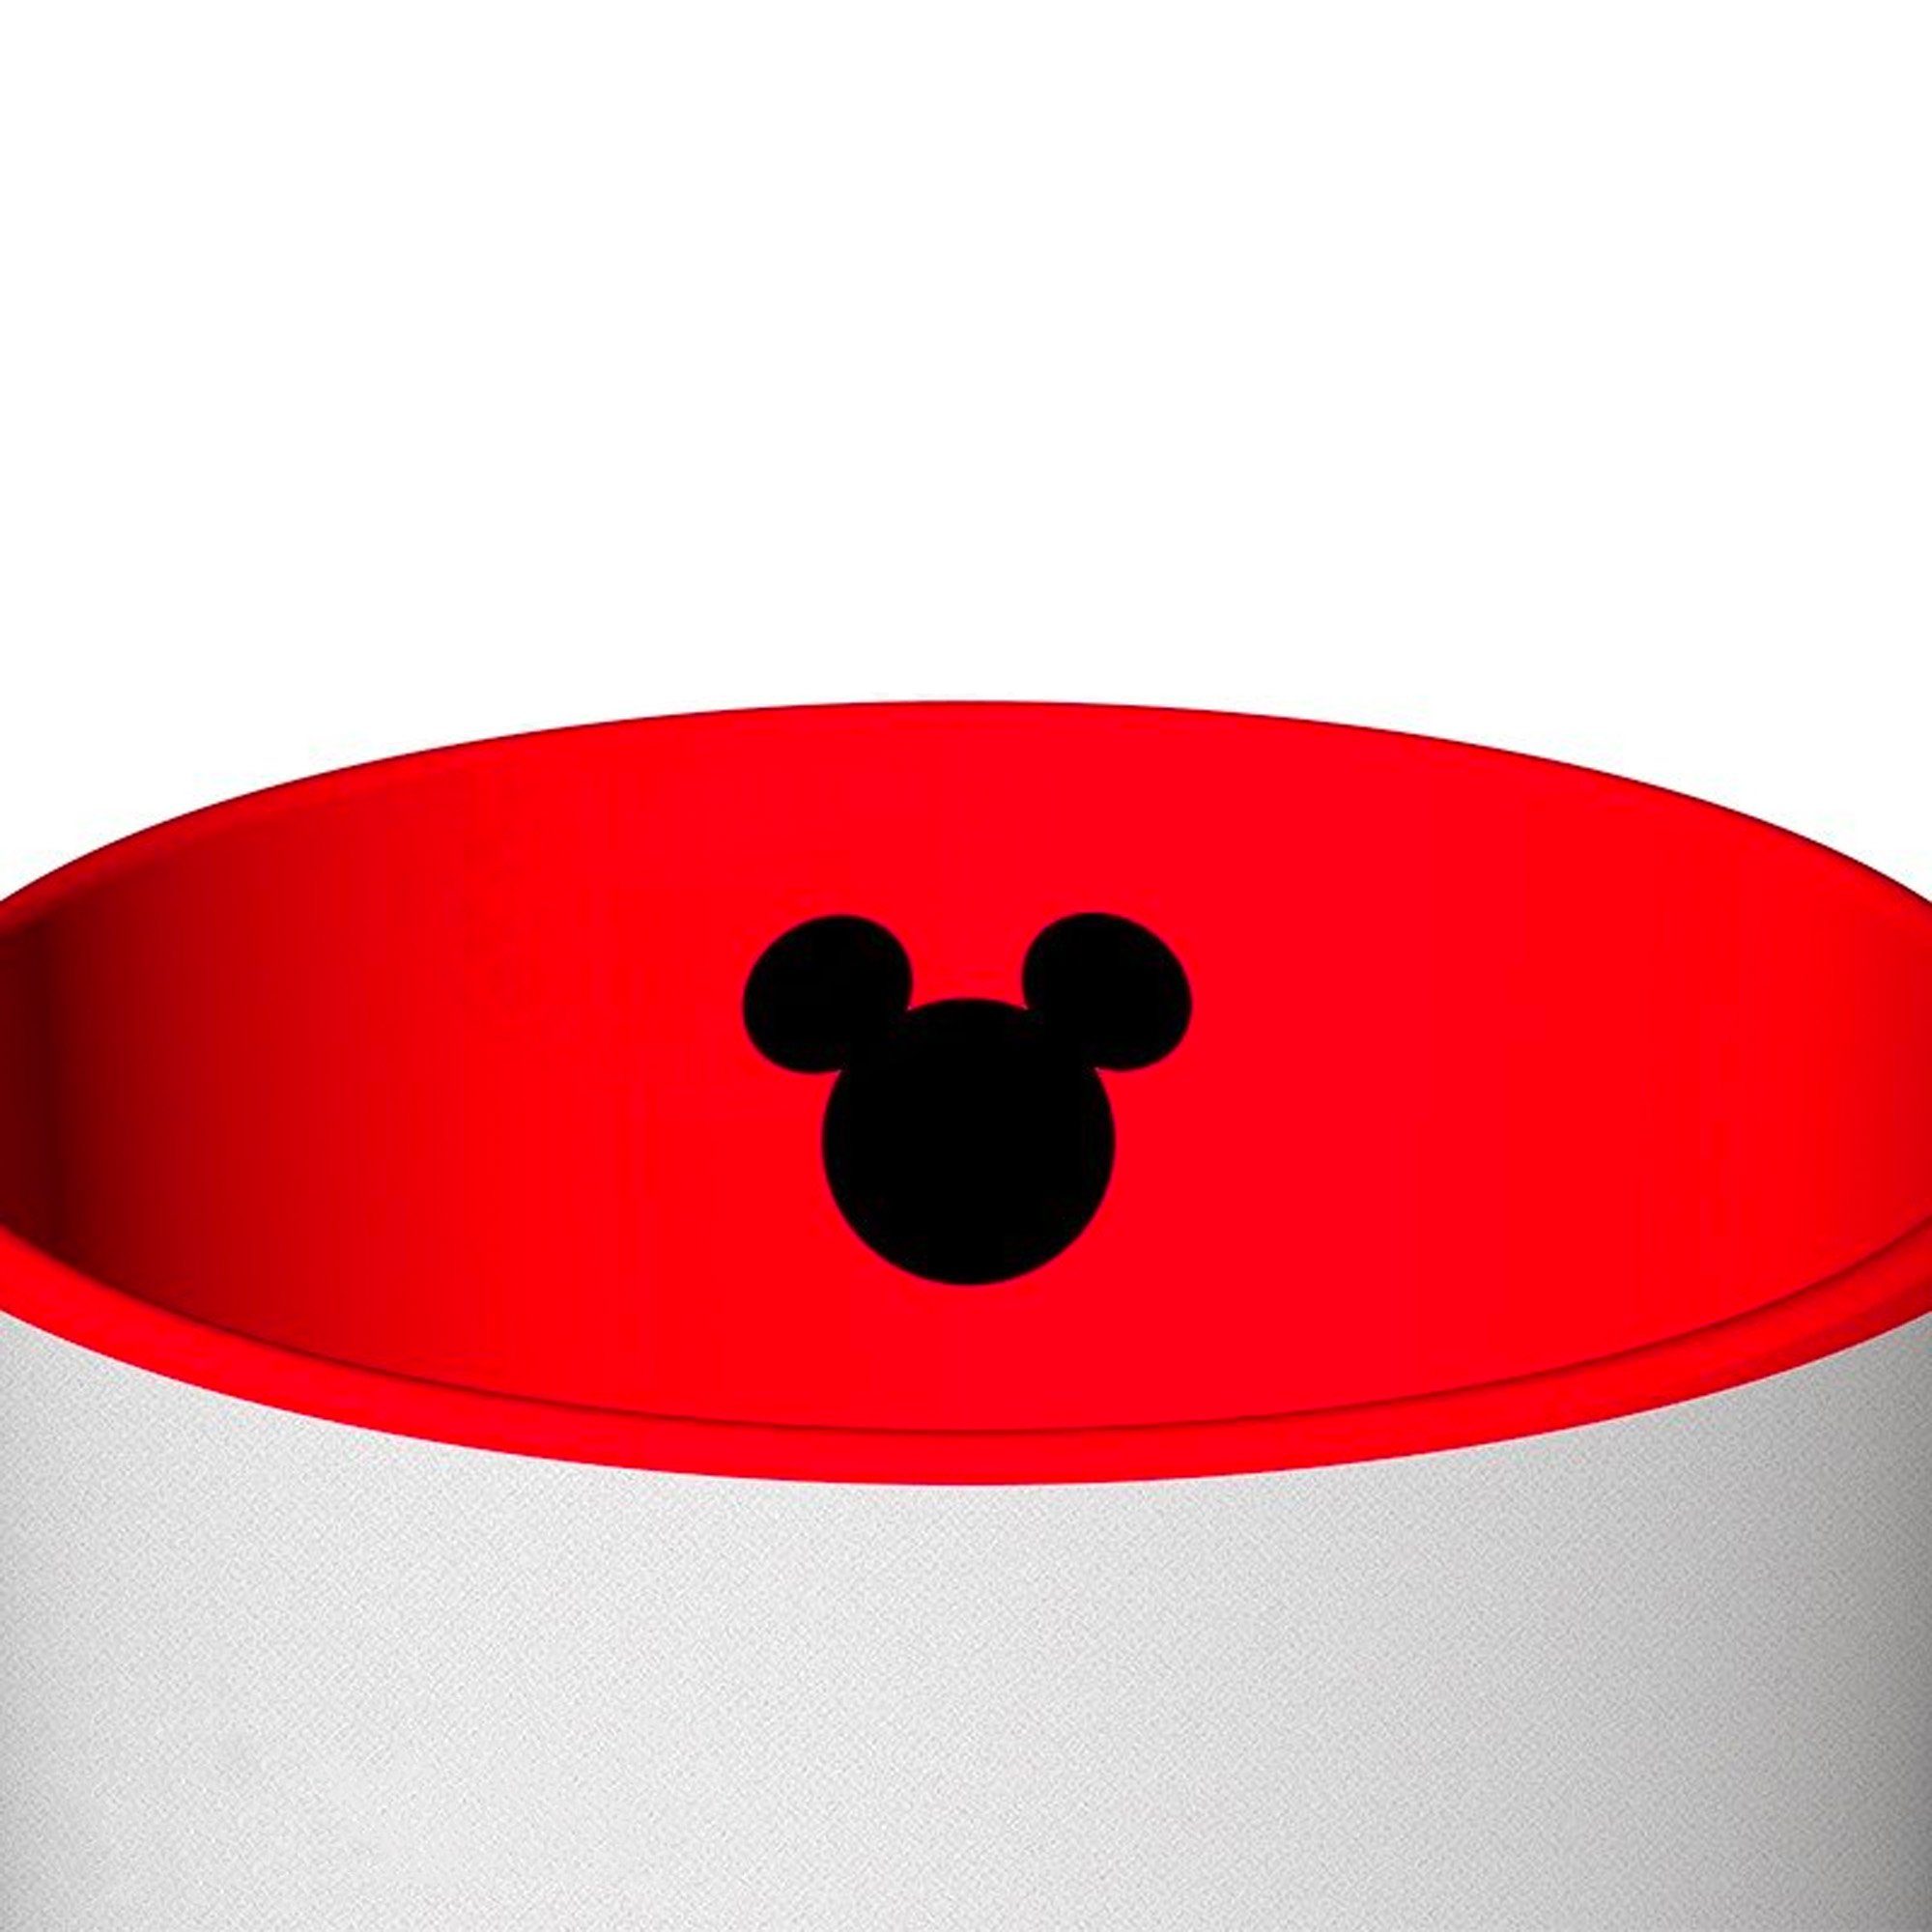 King Sketch Size Disney ABYstyle Mickey - Tasse